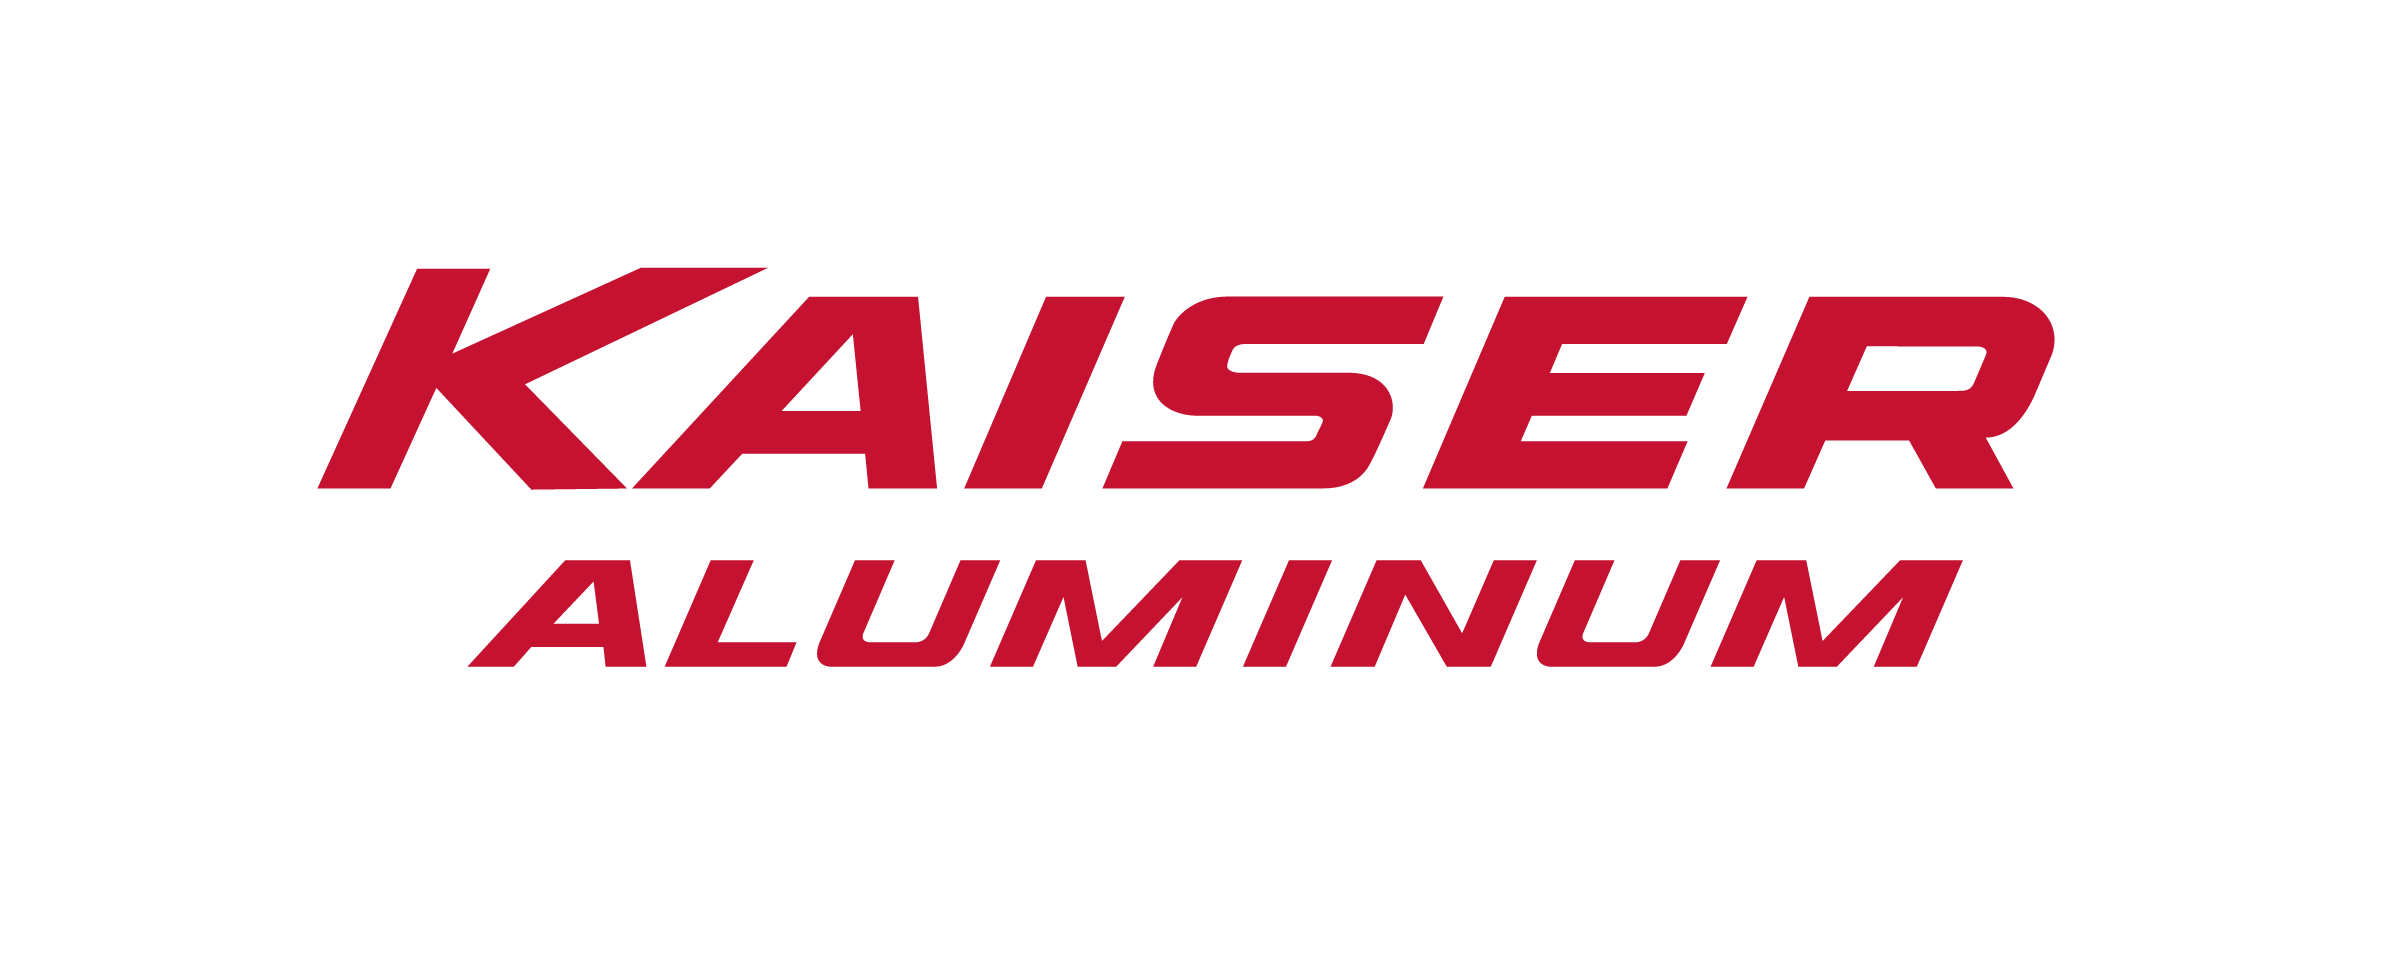 Kaiser Aluminum Corporation Announces Quarterly Dividend